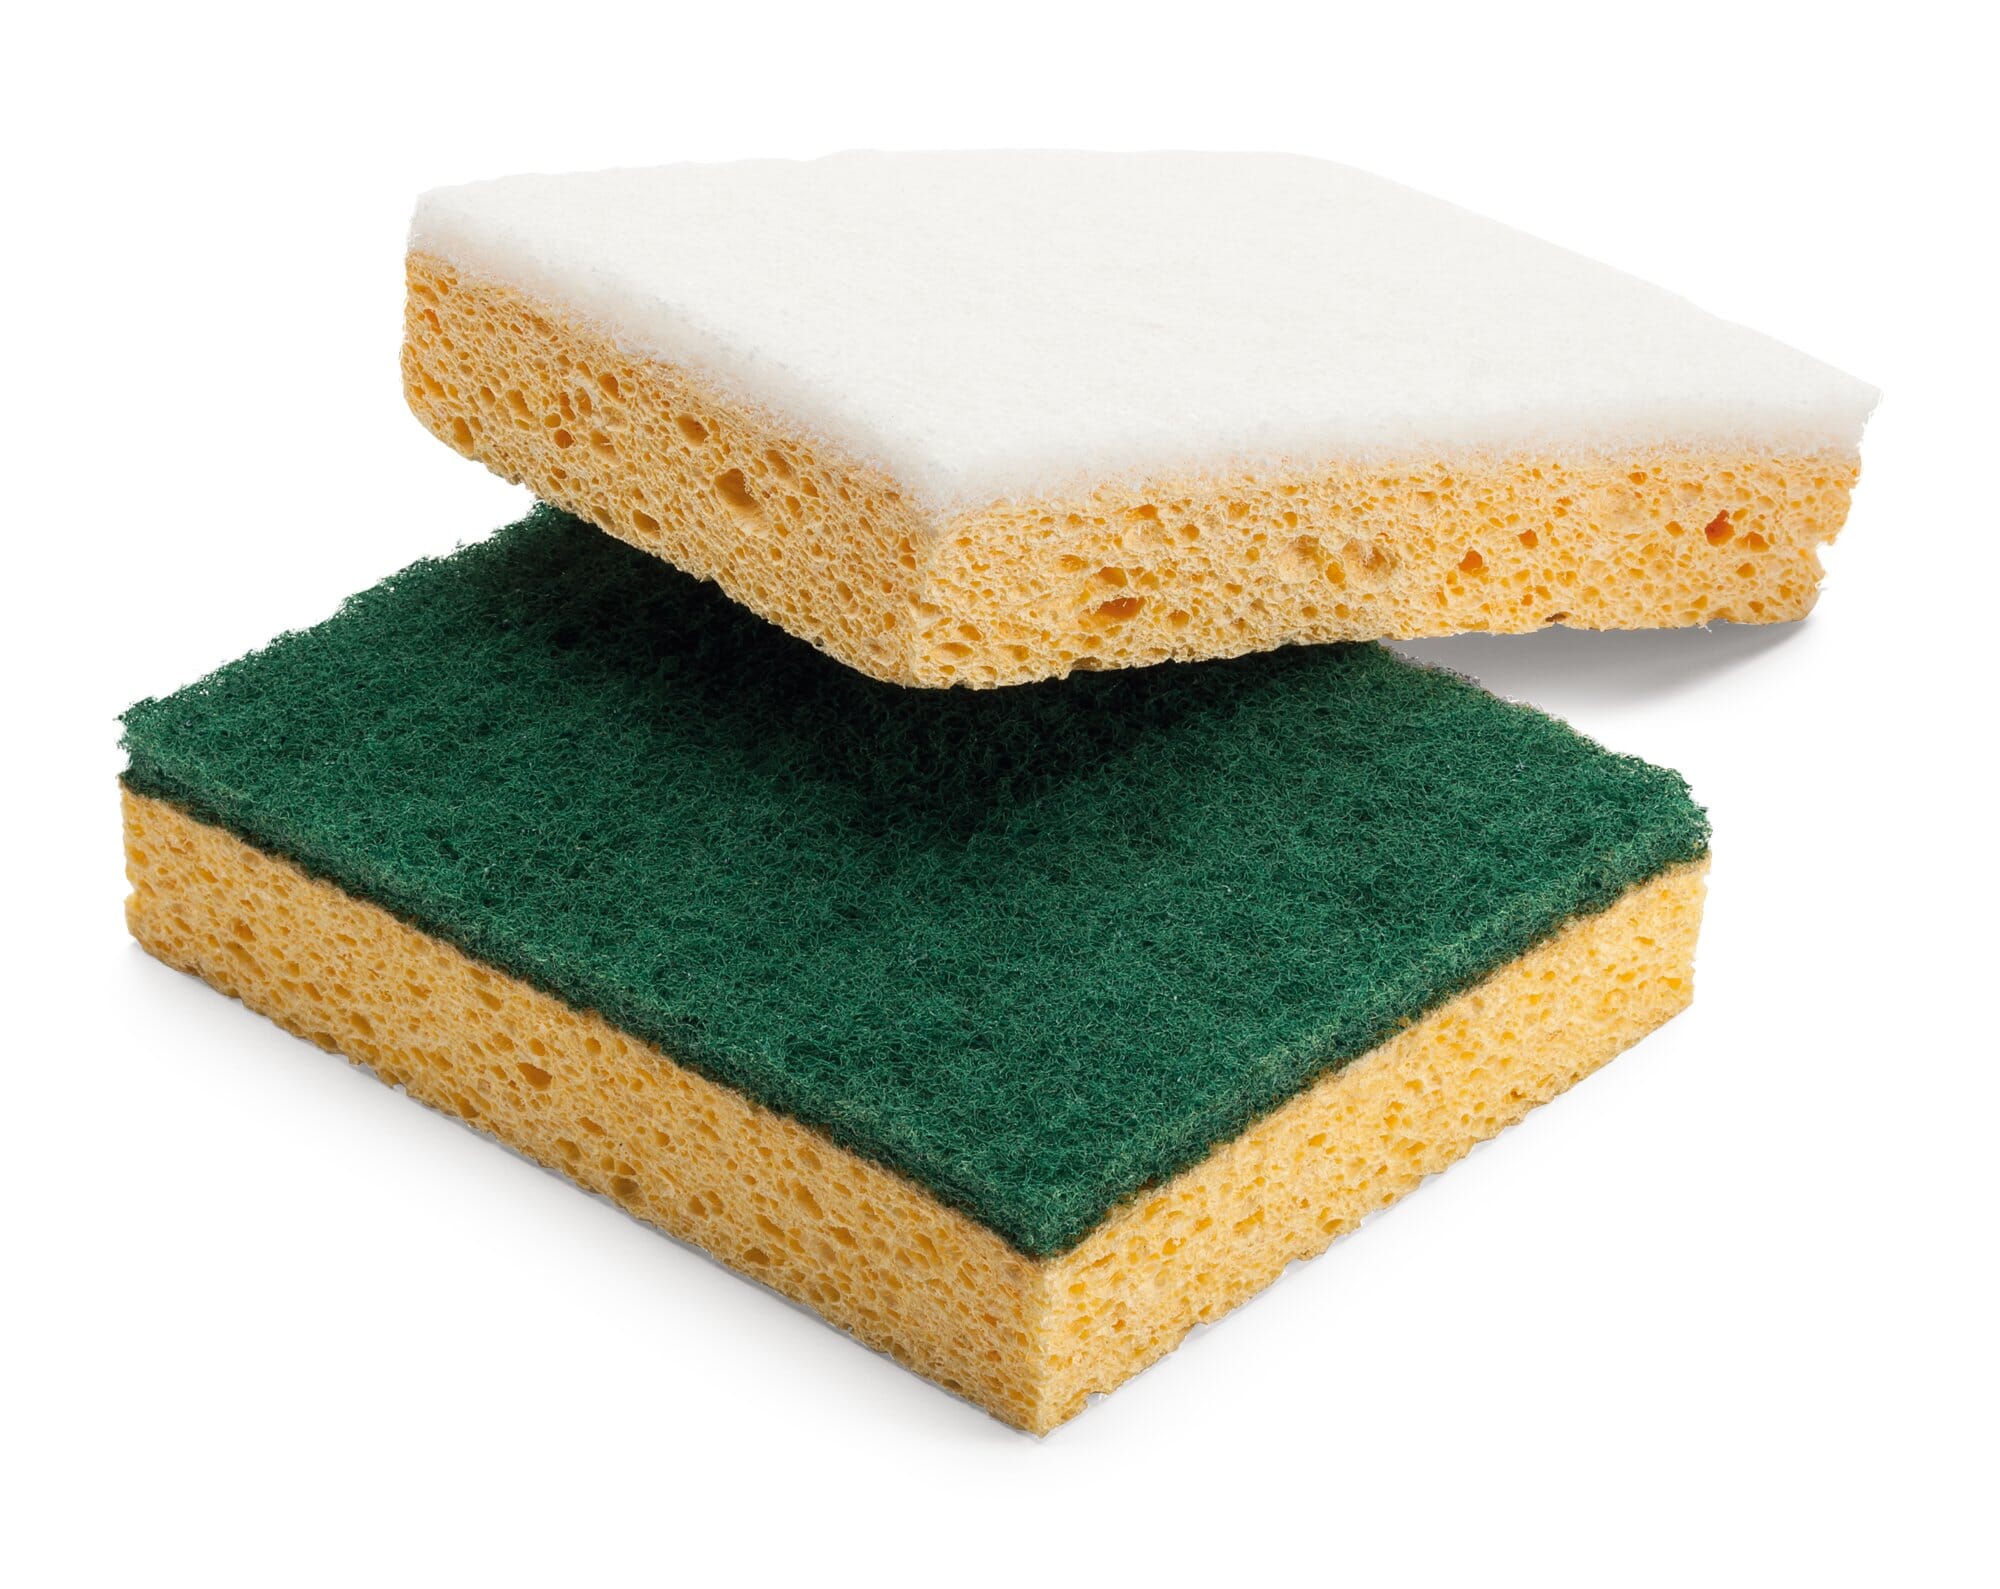 Abrasive sponge cellulose strong